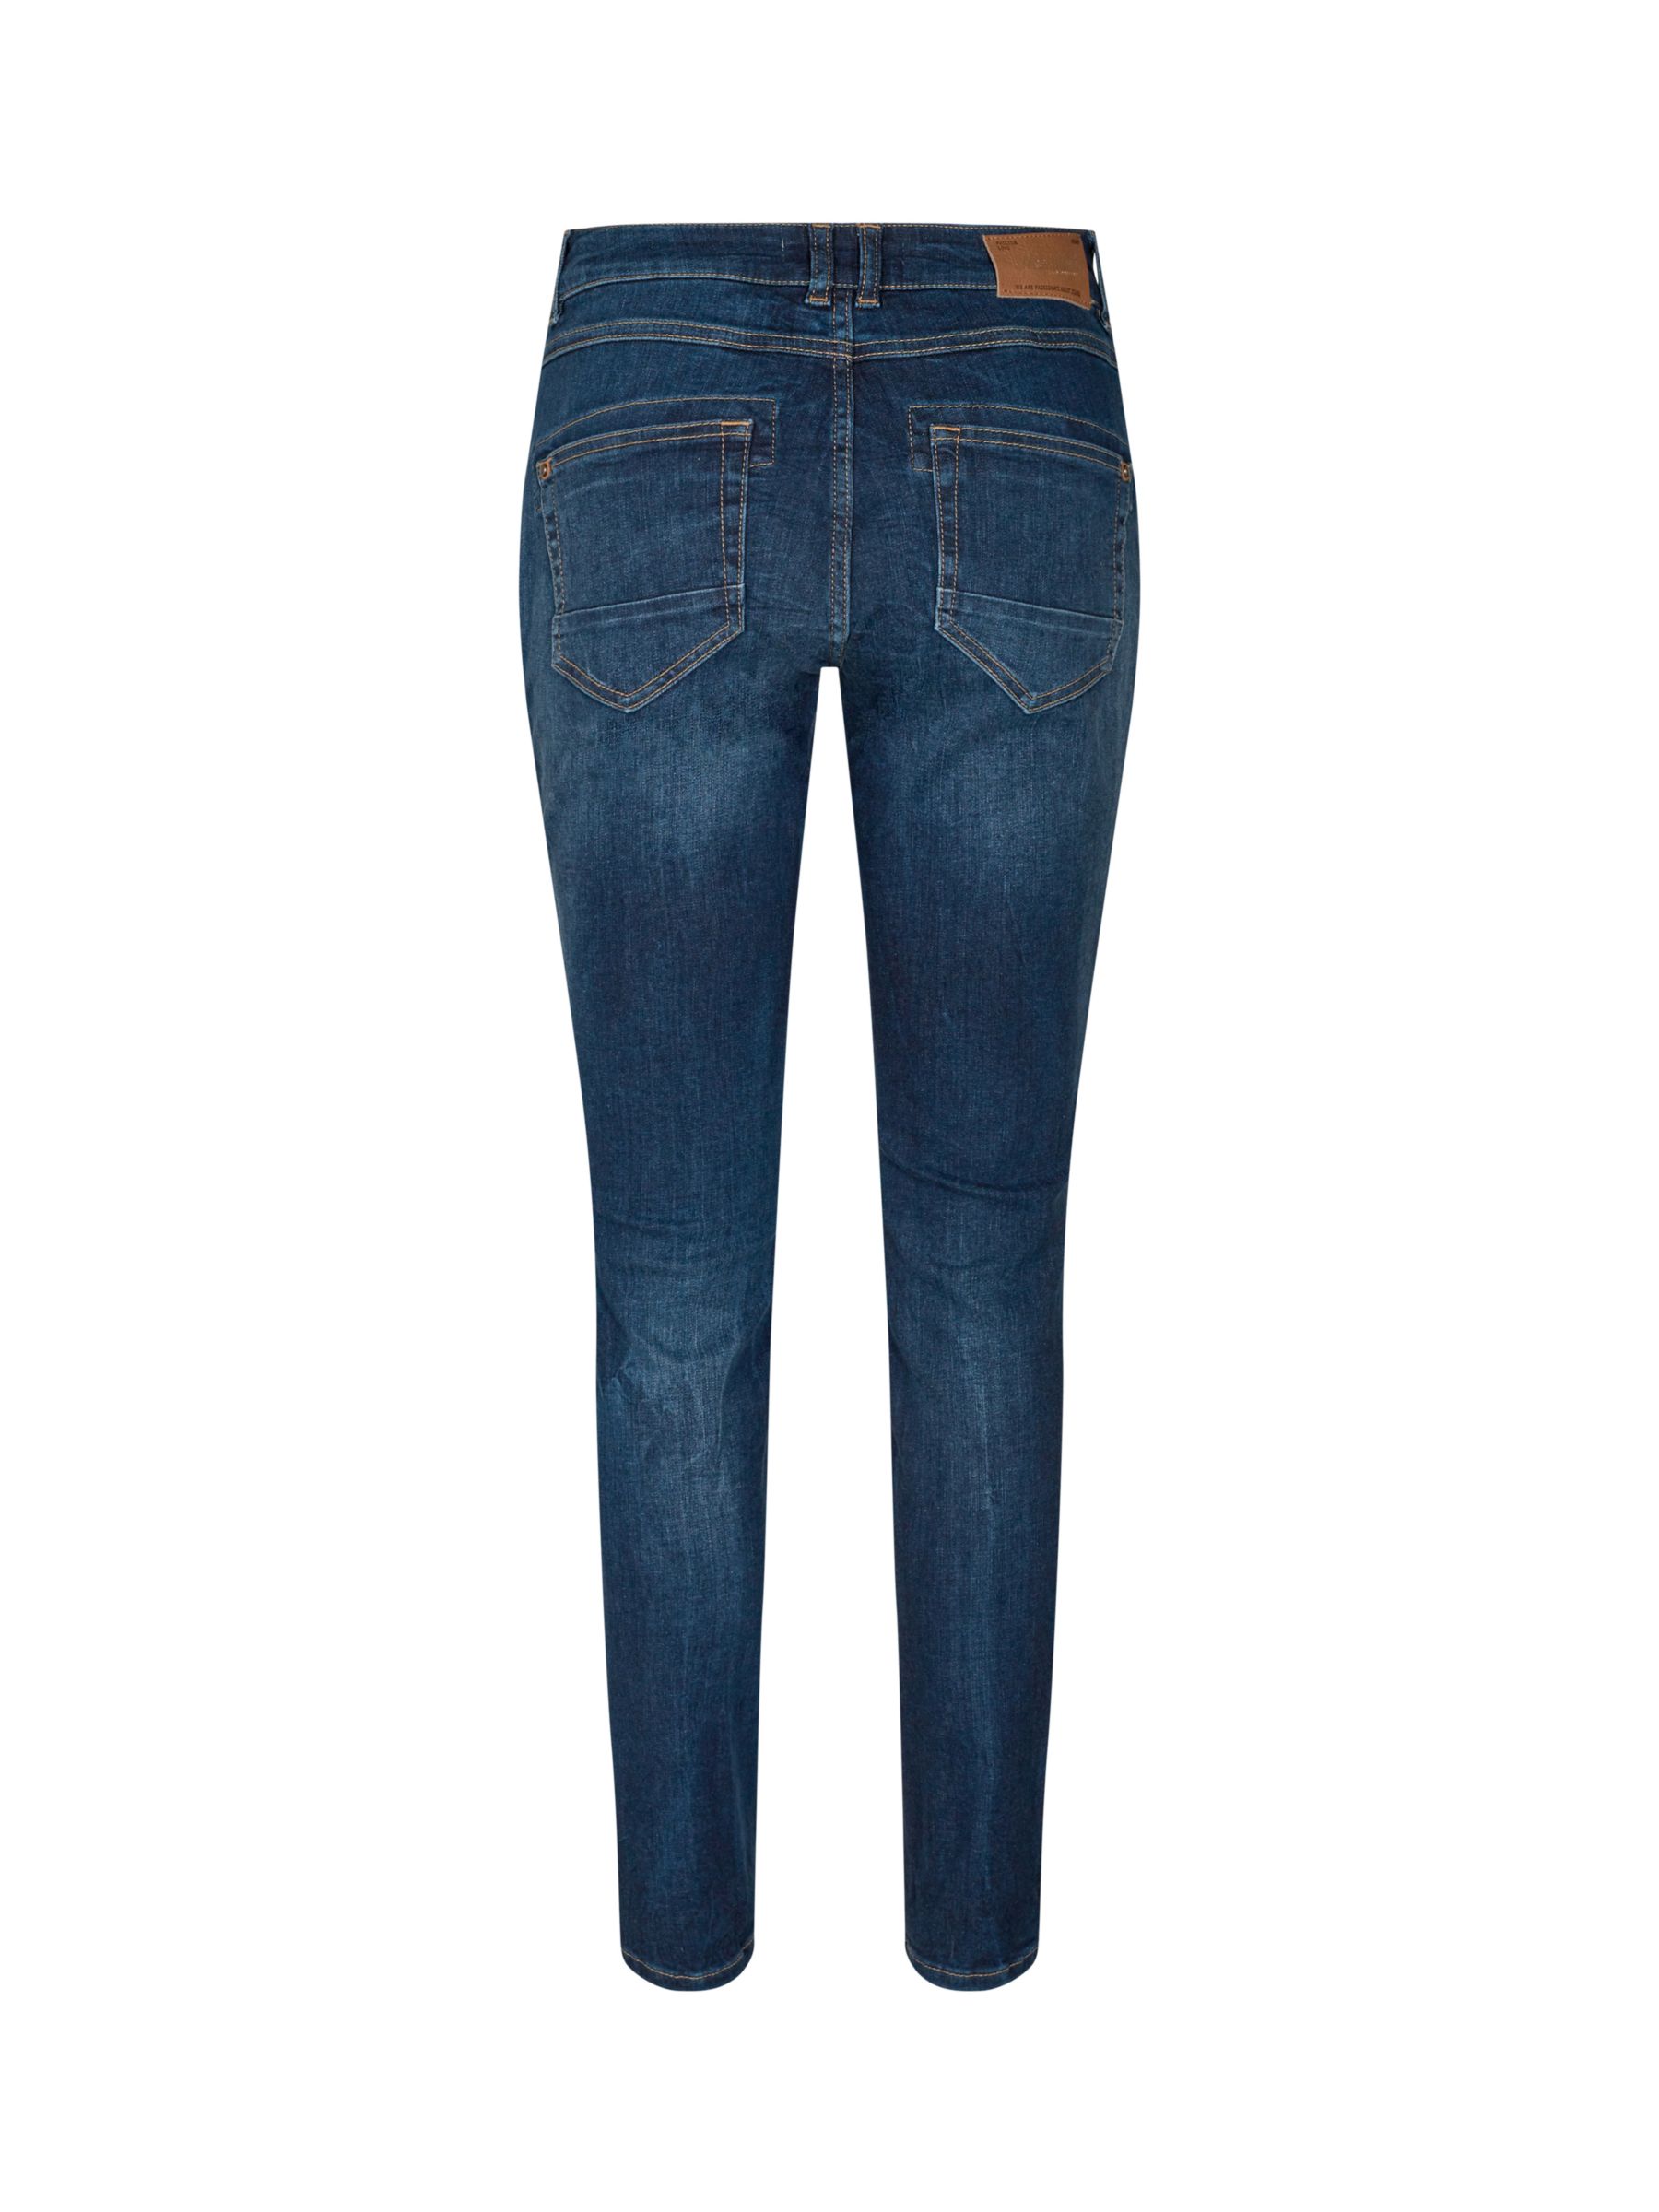 MOS MOSH Naomi Pocket Detail Jeans, Blue, 25R